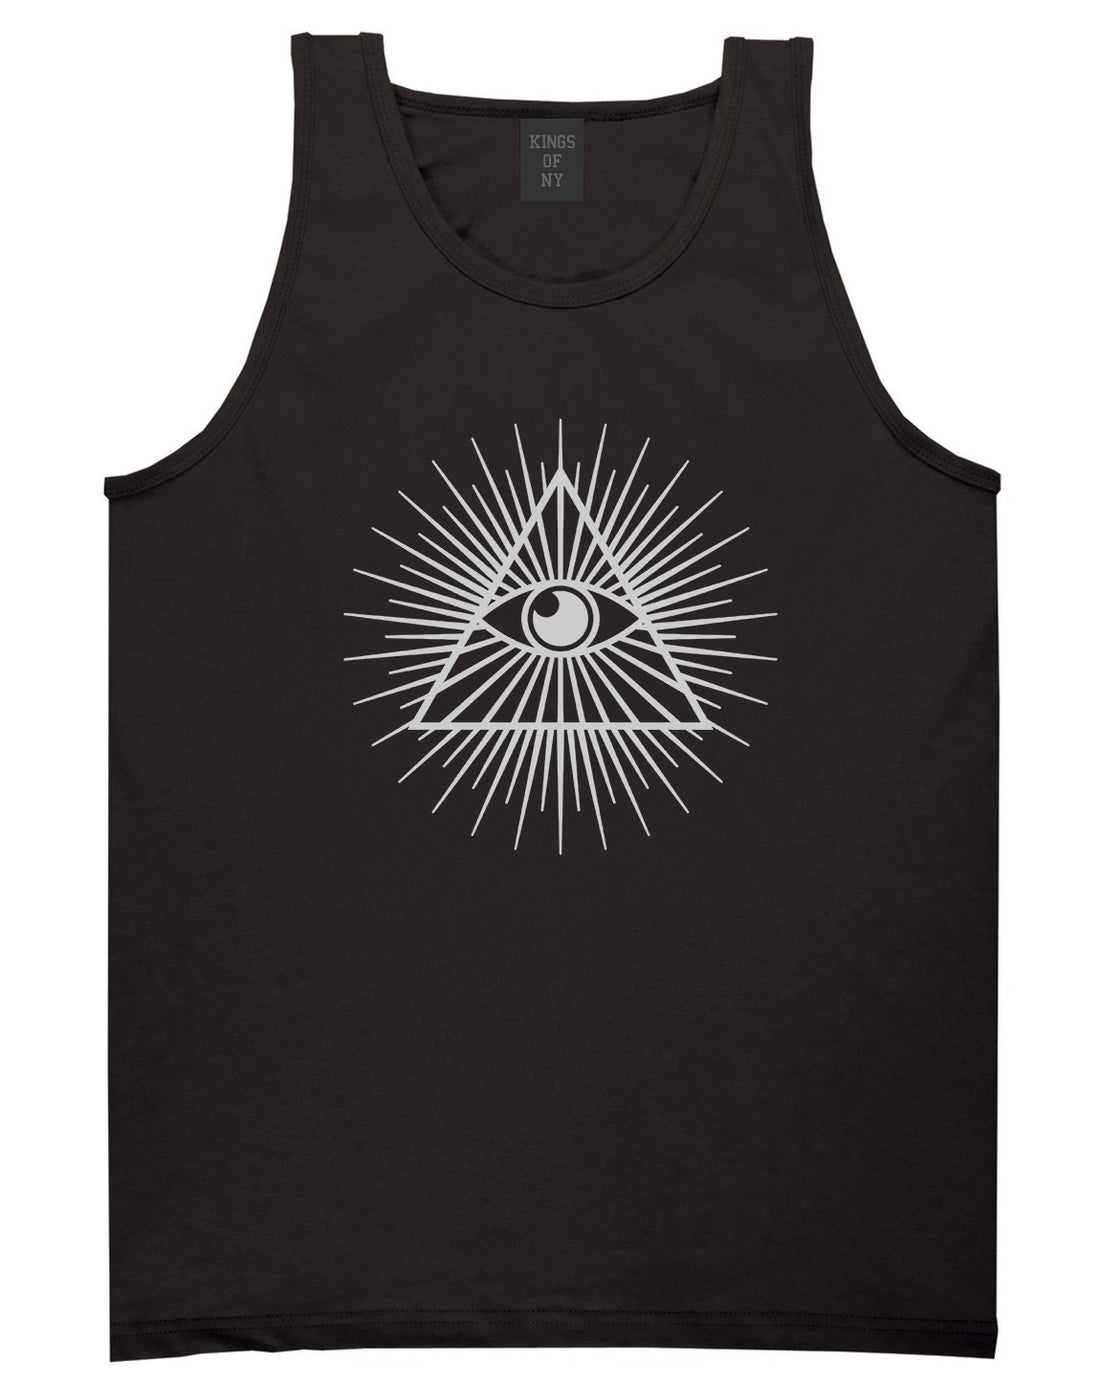 Eye Of Providence illuminati Mens Tank Top Shirt Black